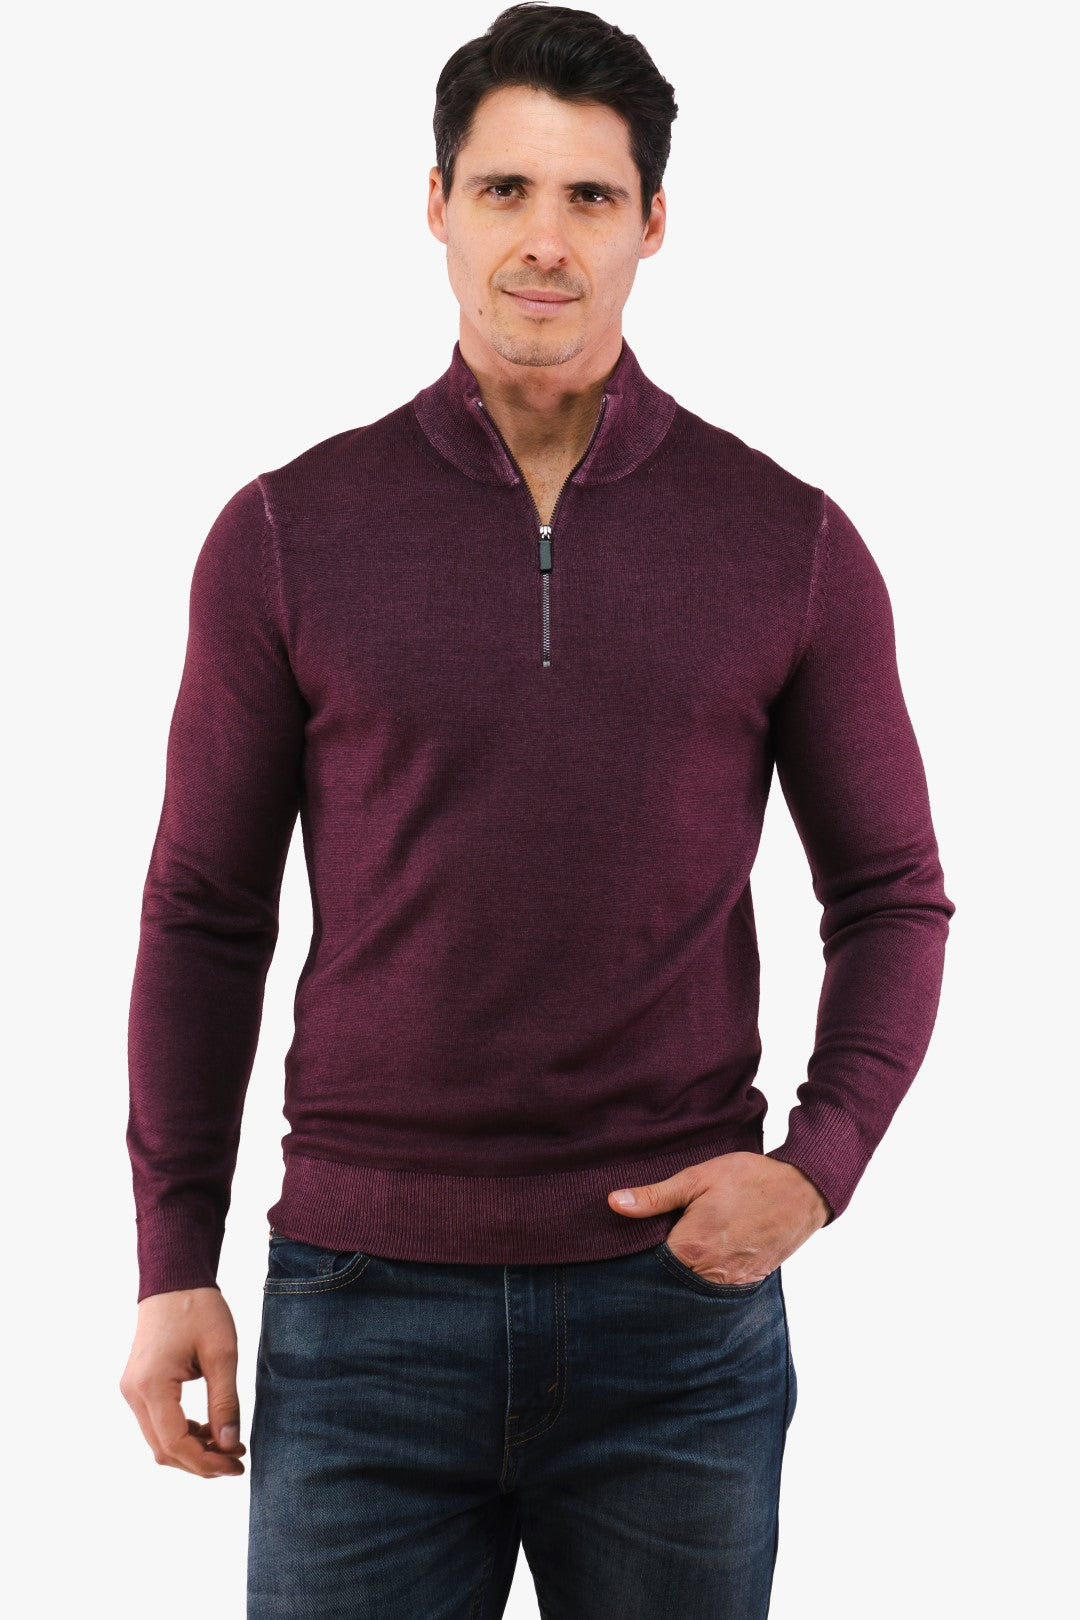 Michael Kors sweater in Merlot color